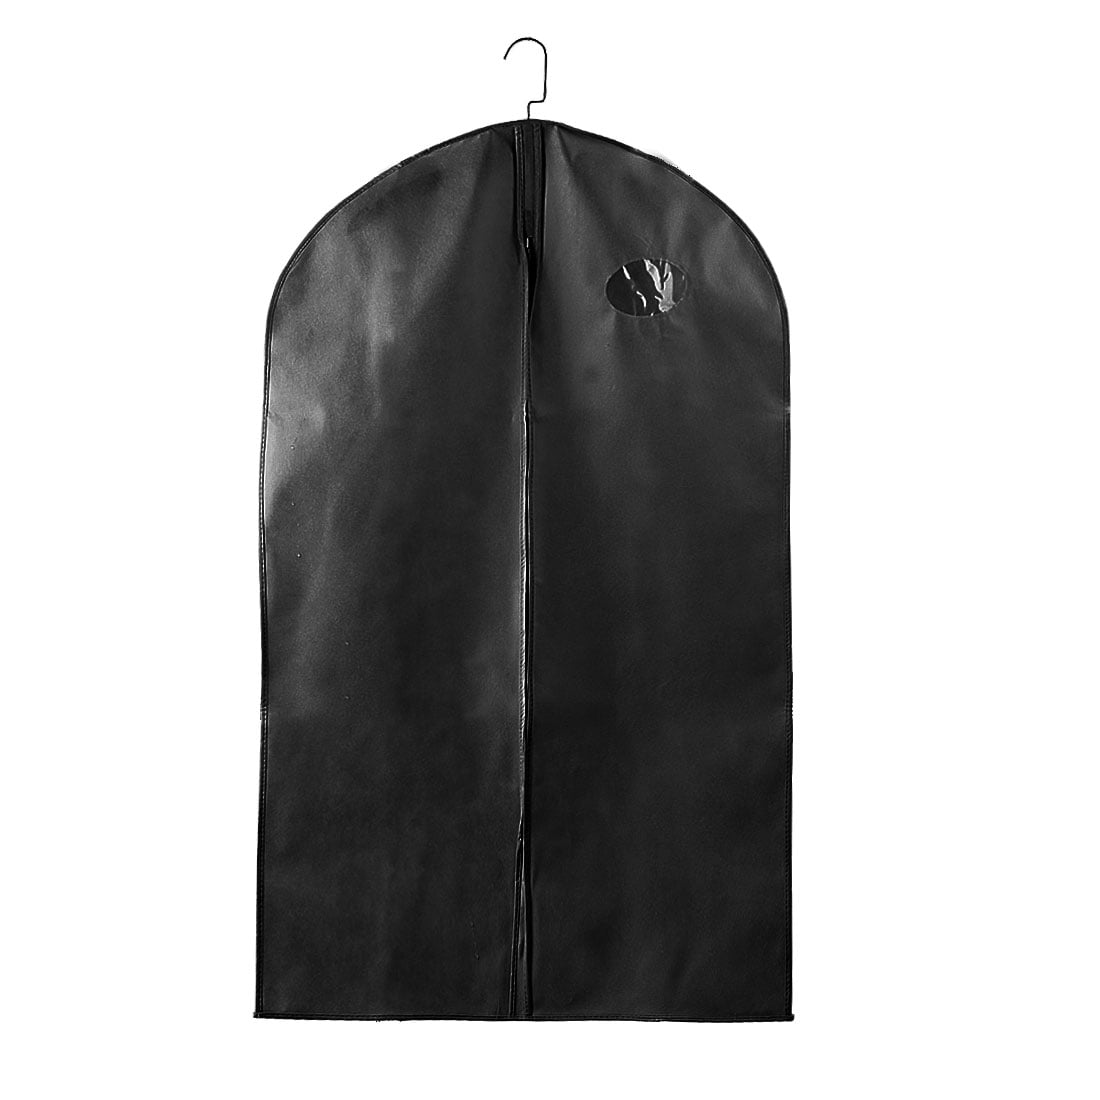 suit garment bag for travel